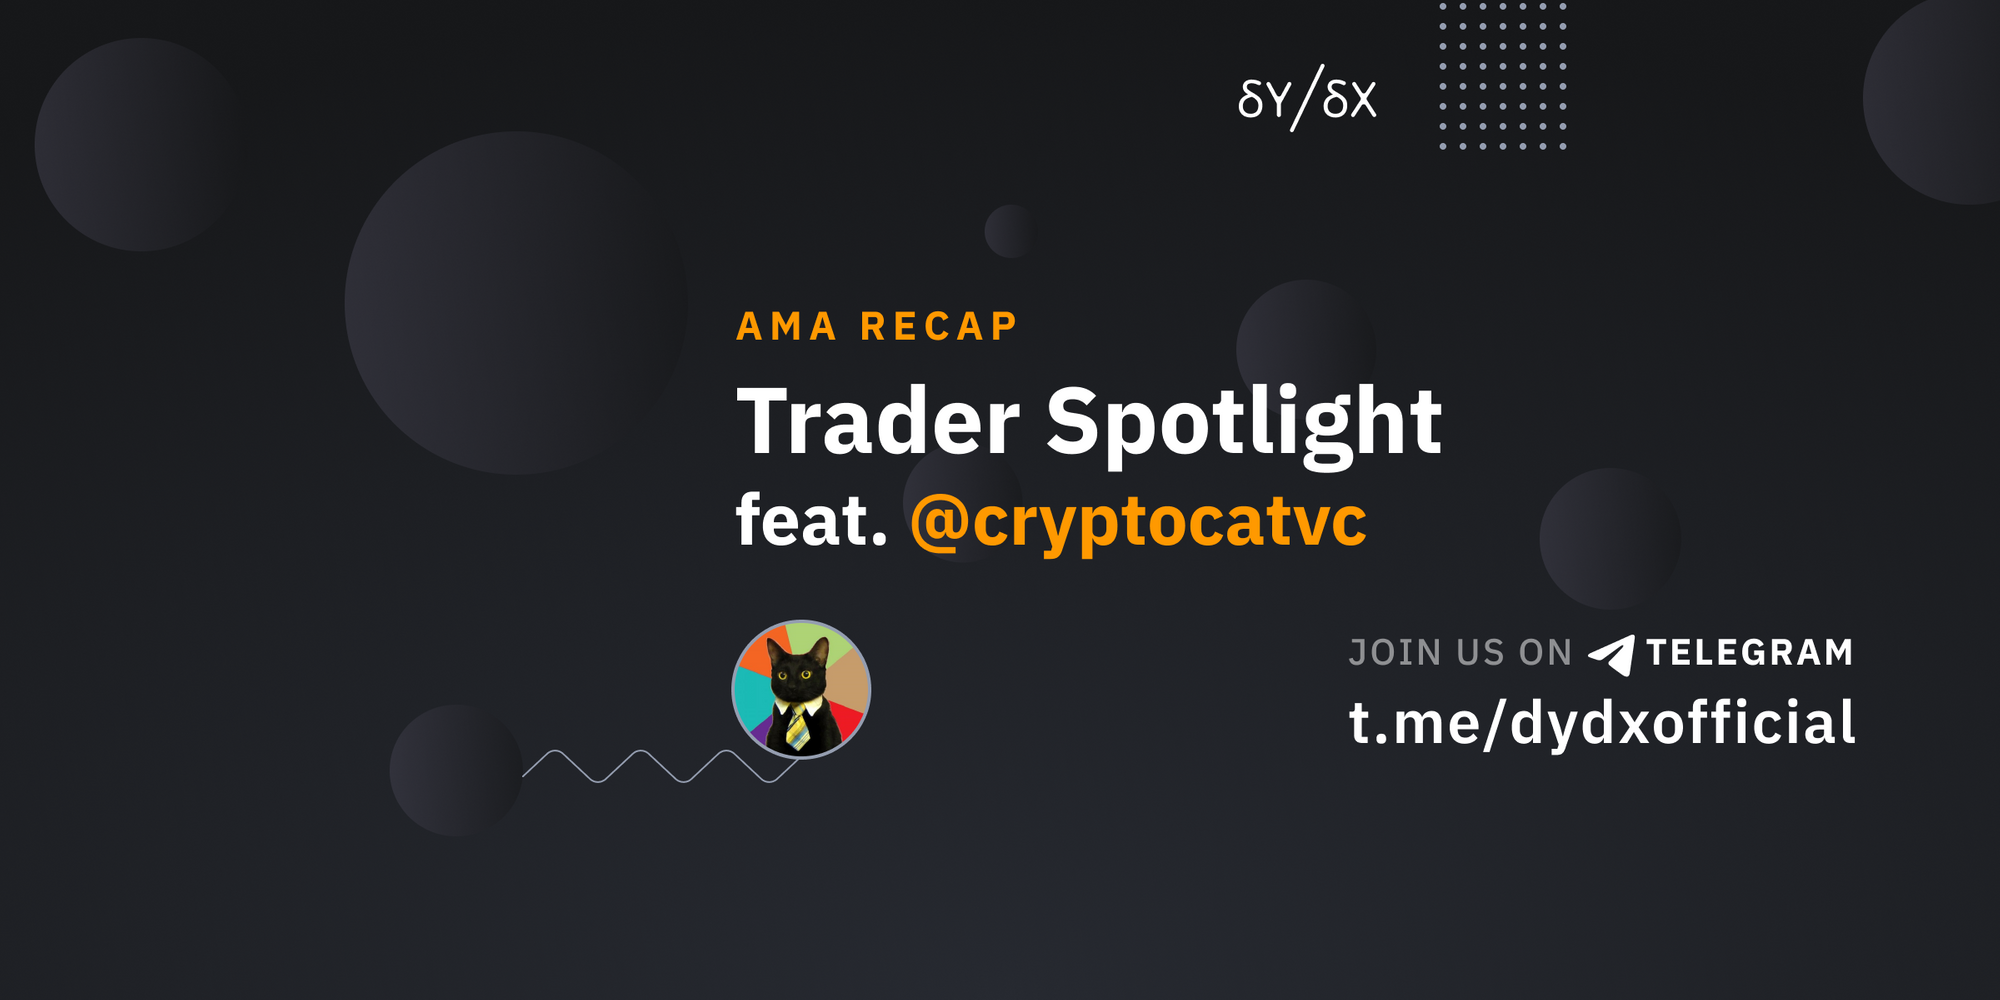 AMA Recap: Trader Spotlight feat. CryptoCat